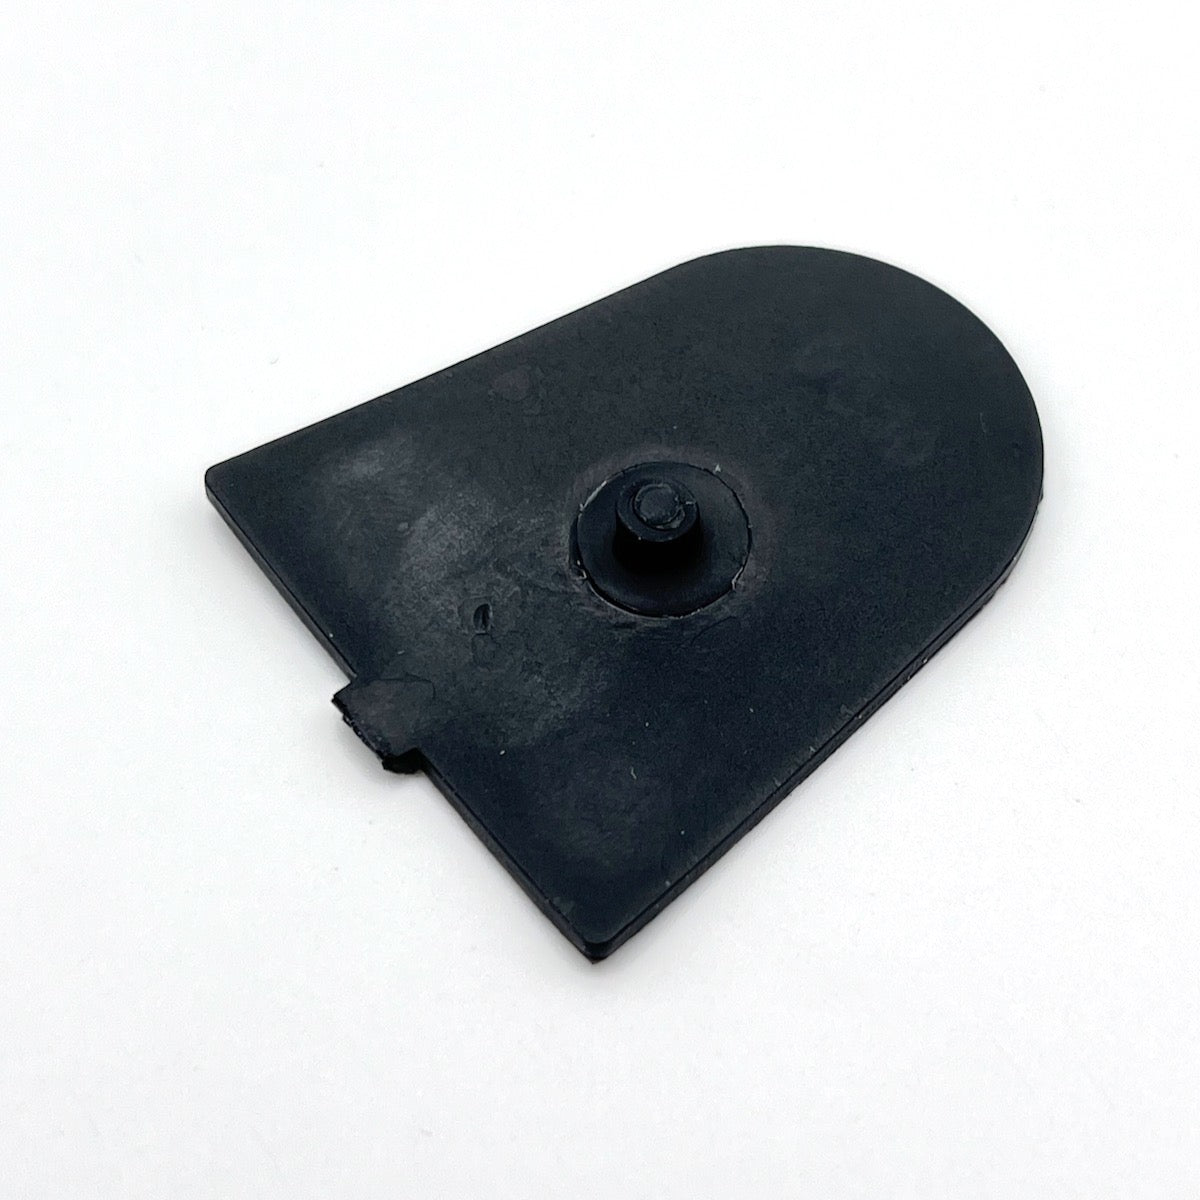 New Rubber power button for collar Garmin DC 30 repacement part repair case